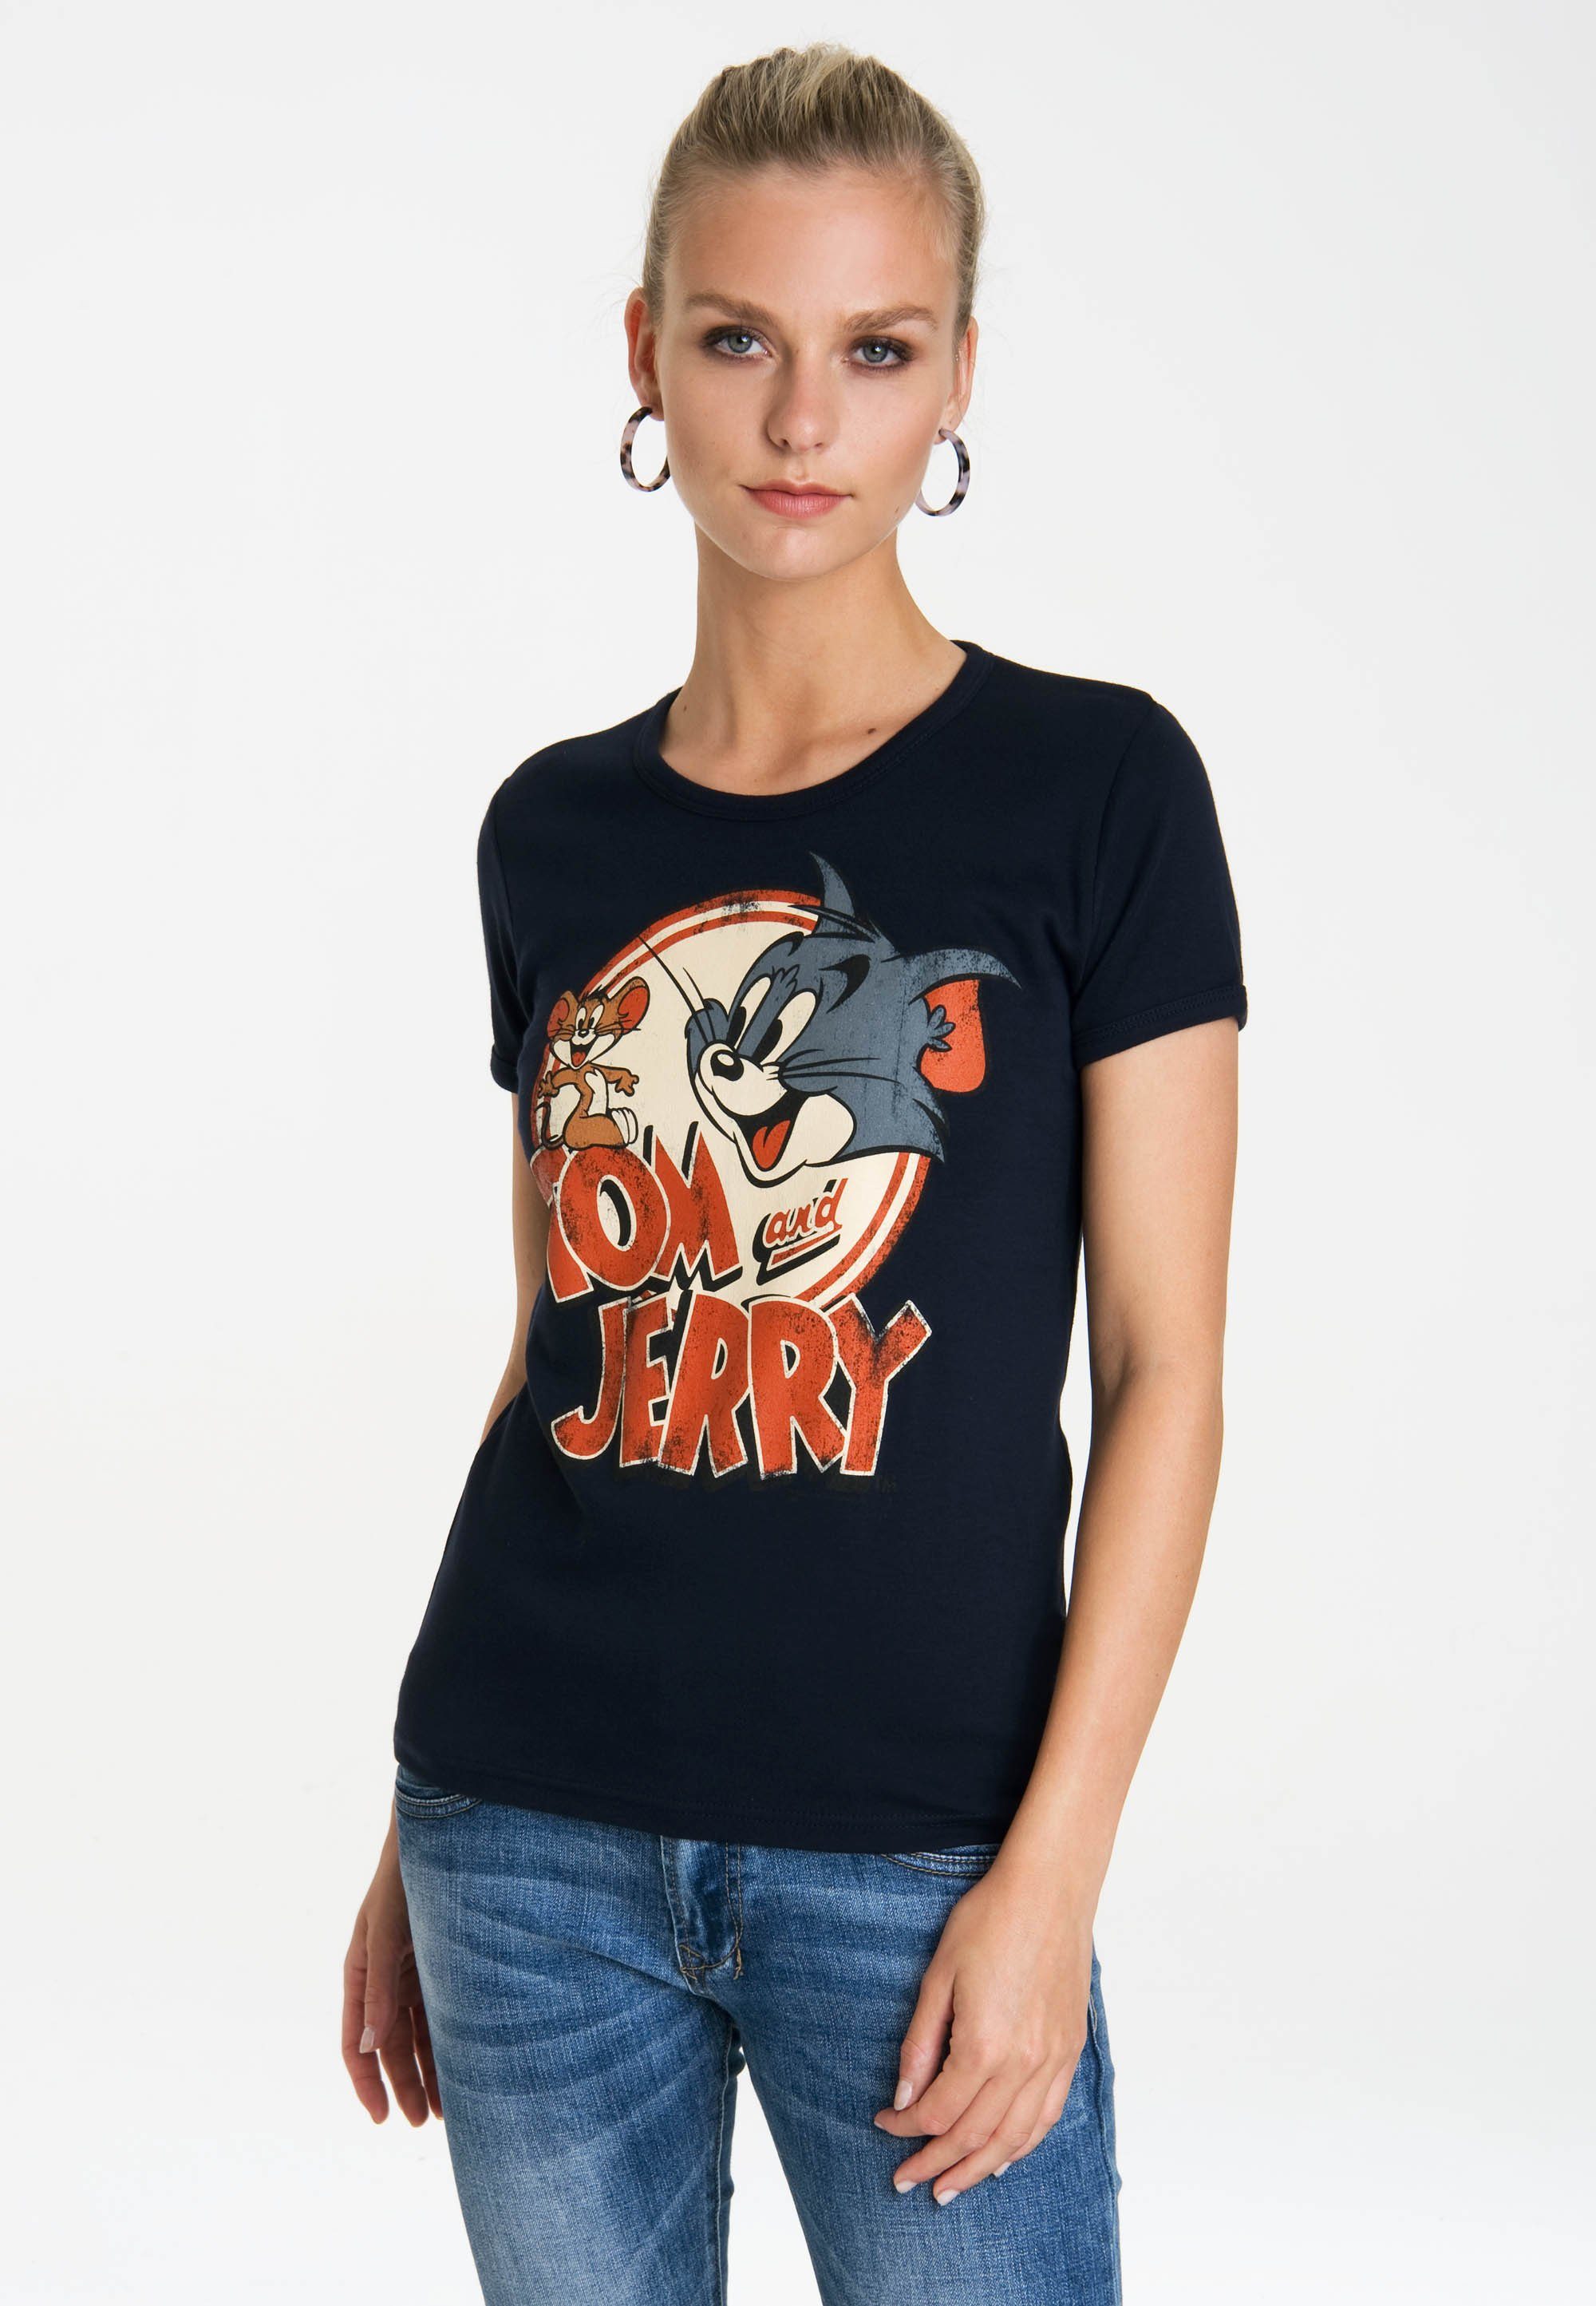 T-Shirt lizenziertem Jerry LOGOSHIRT schwarz mit & Originaldesign Tom